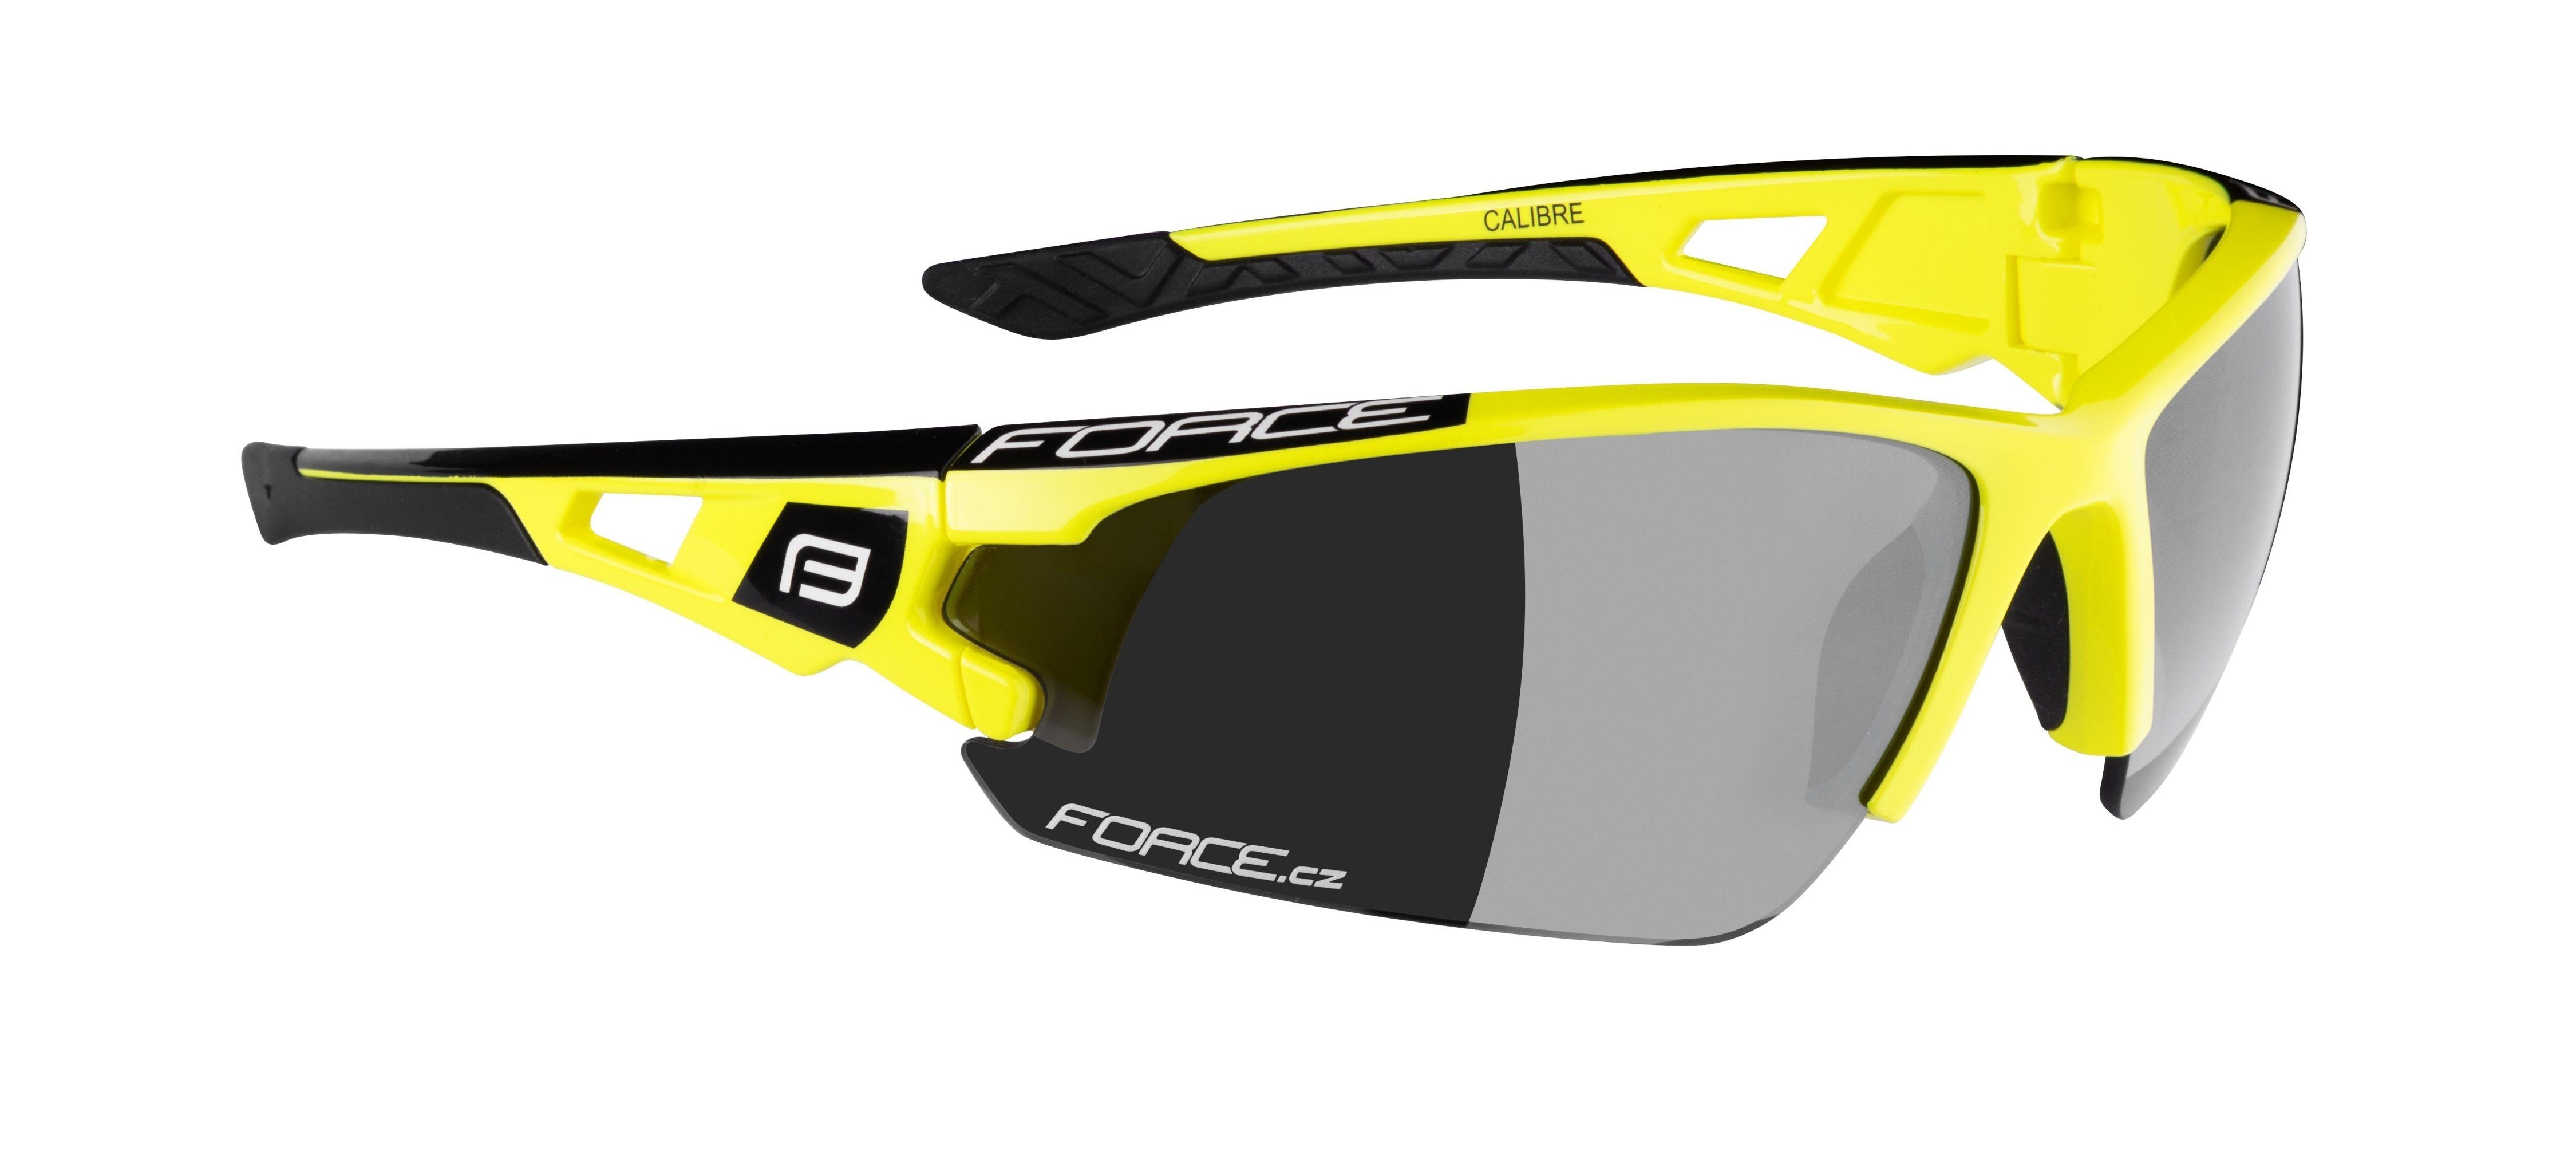 CALIBRE FORCE FORCE gelb-schwarz Fahrradbrille Sonnenbrille